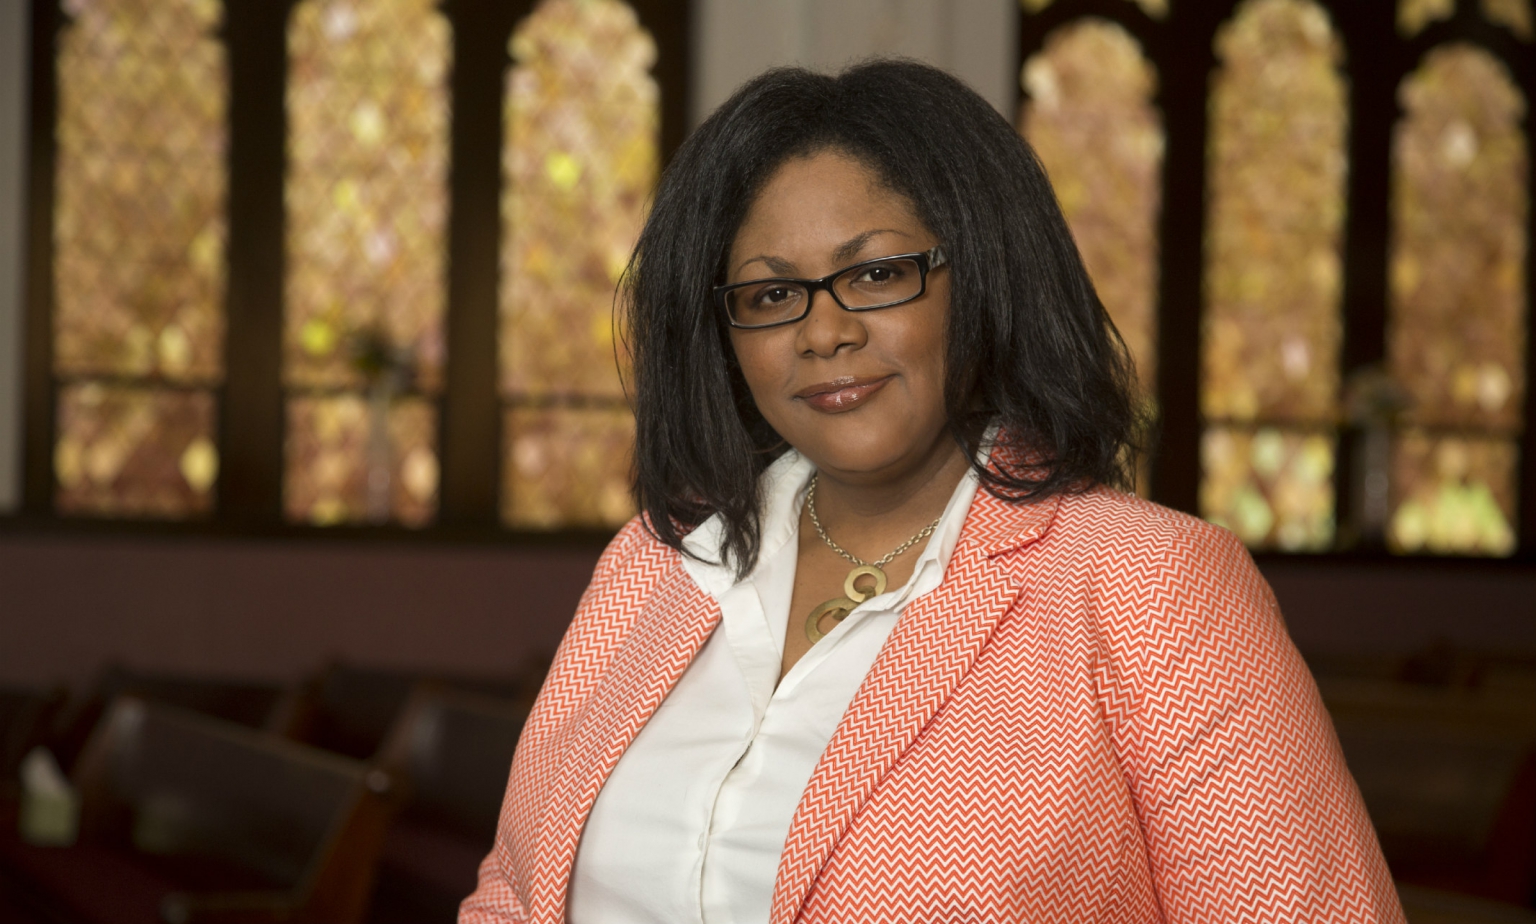 Jannette Berkley-Patton, Ph.D., leads the UMKC Health Equity Institute